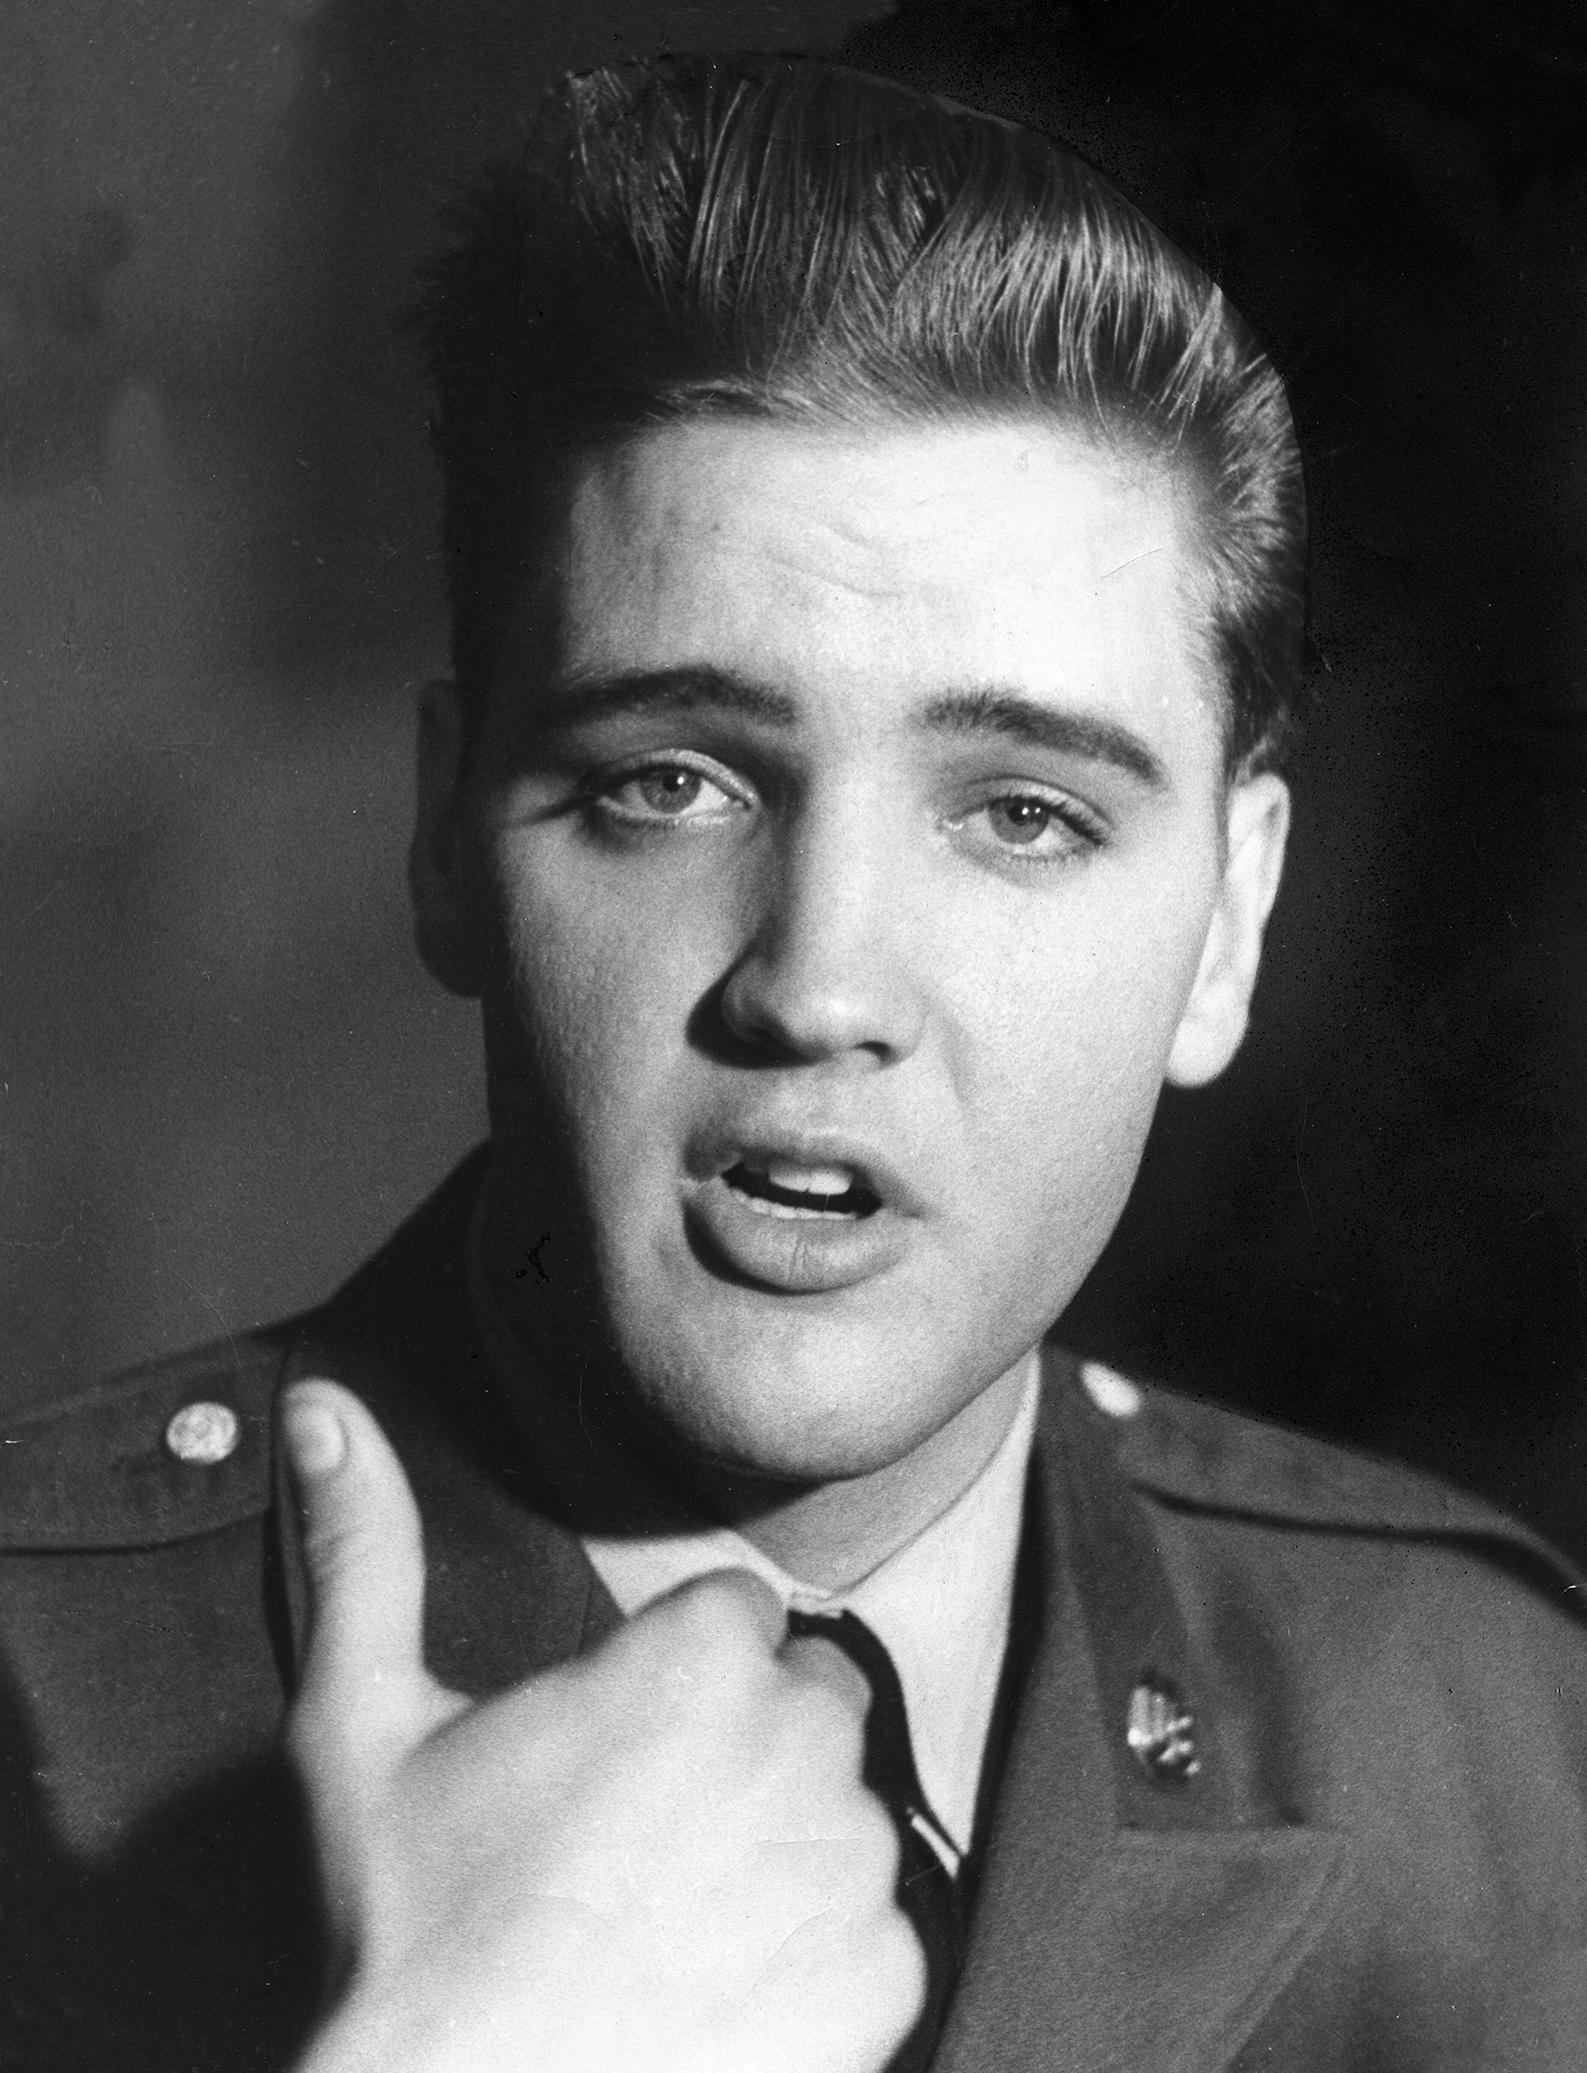 Unknown Portrait Photograph - Elvis Presley in Colors